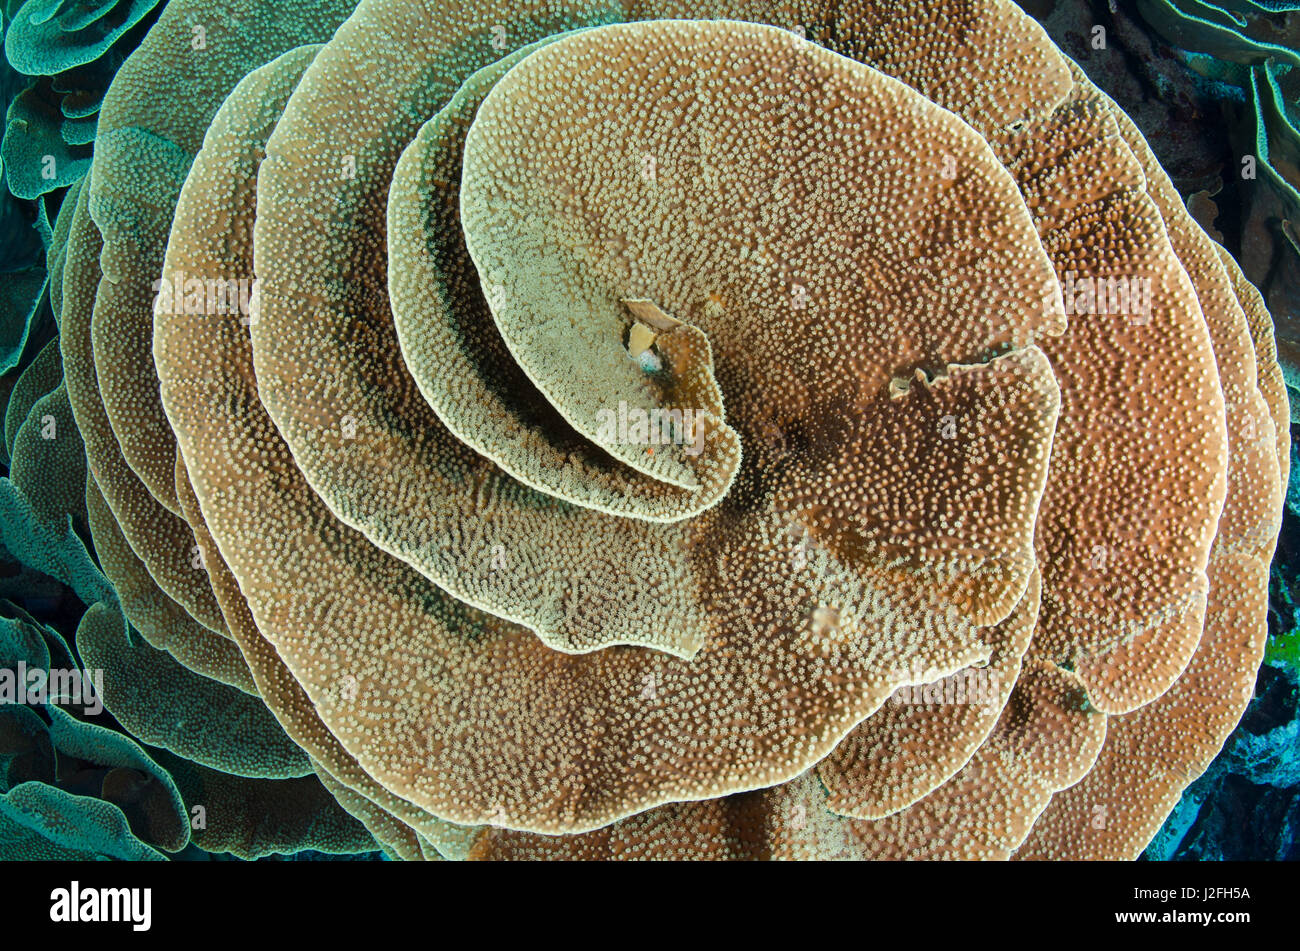 Cabbage sheet coral (Agaricia), Rainbow Reef, Fiji. Stock Photo